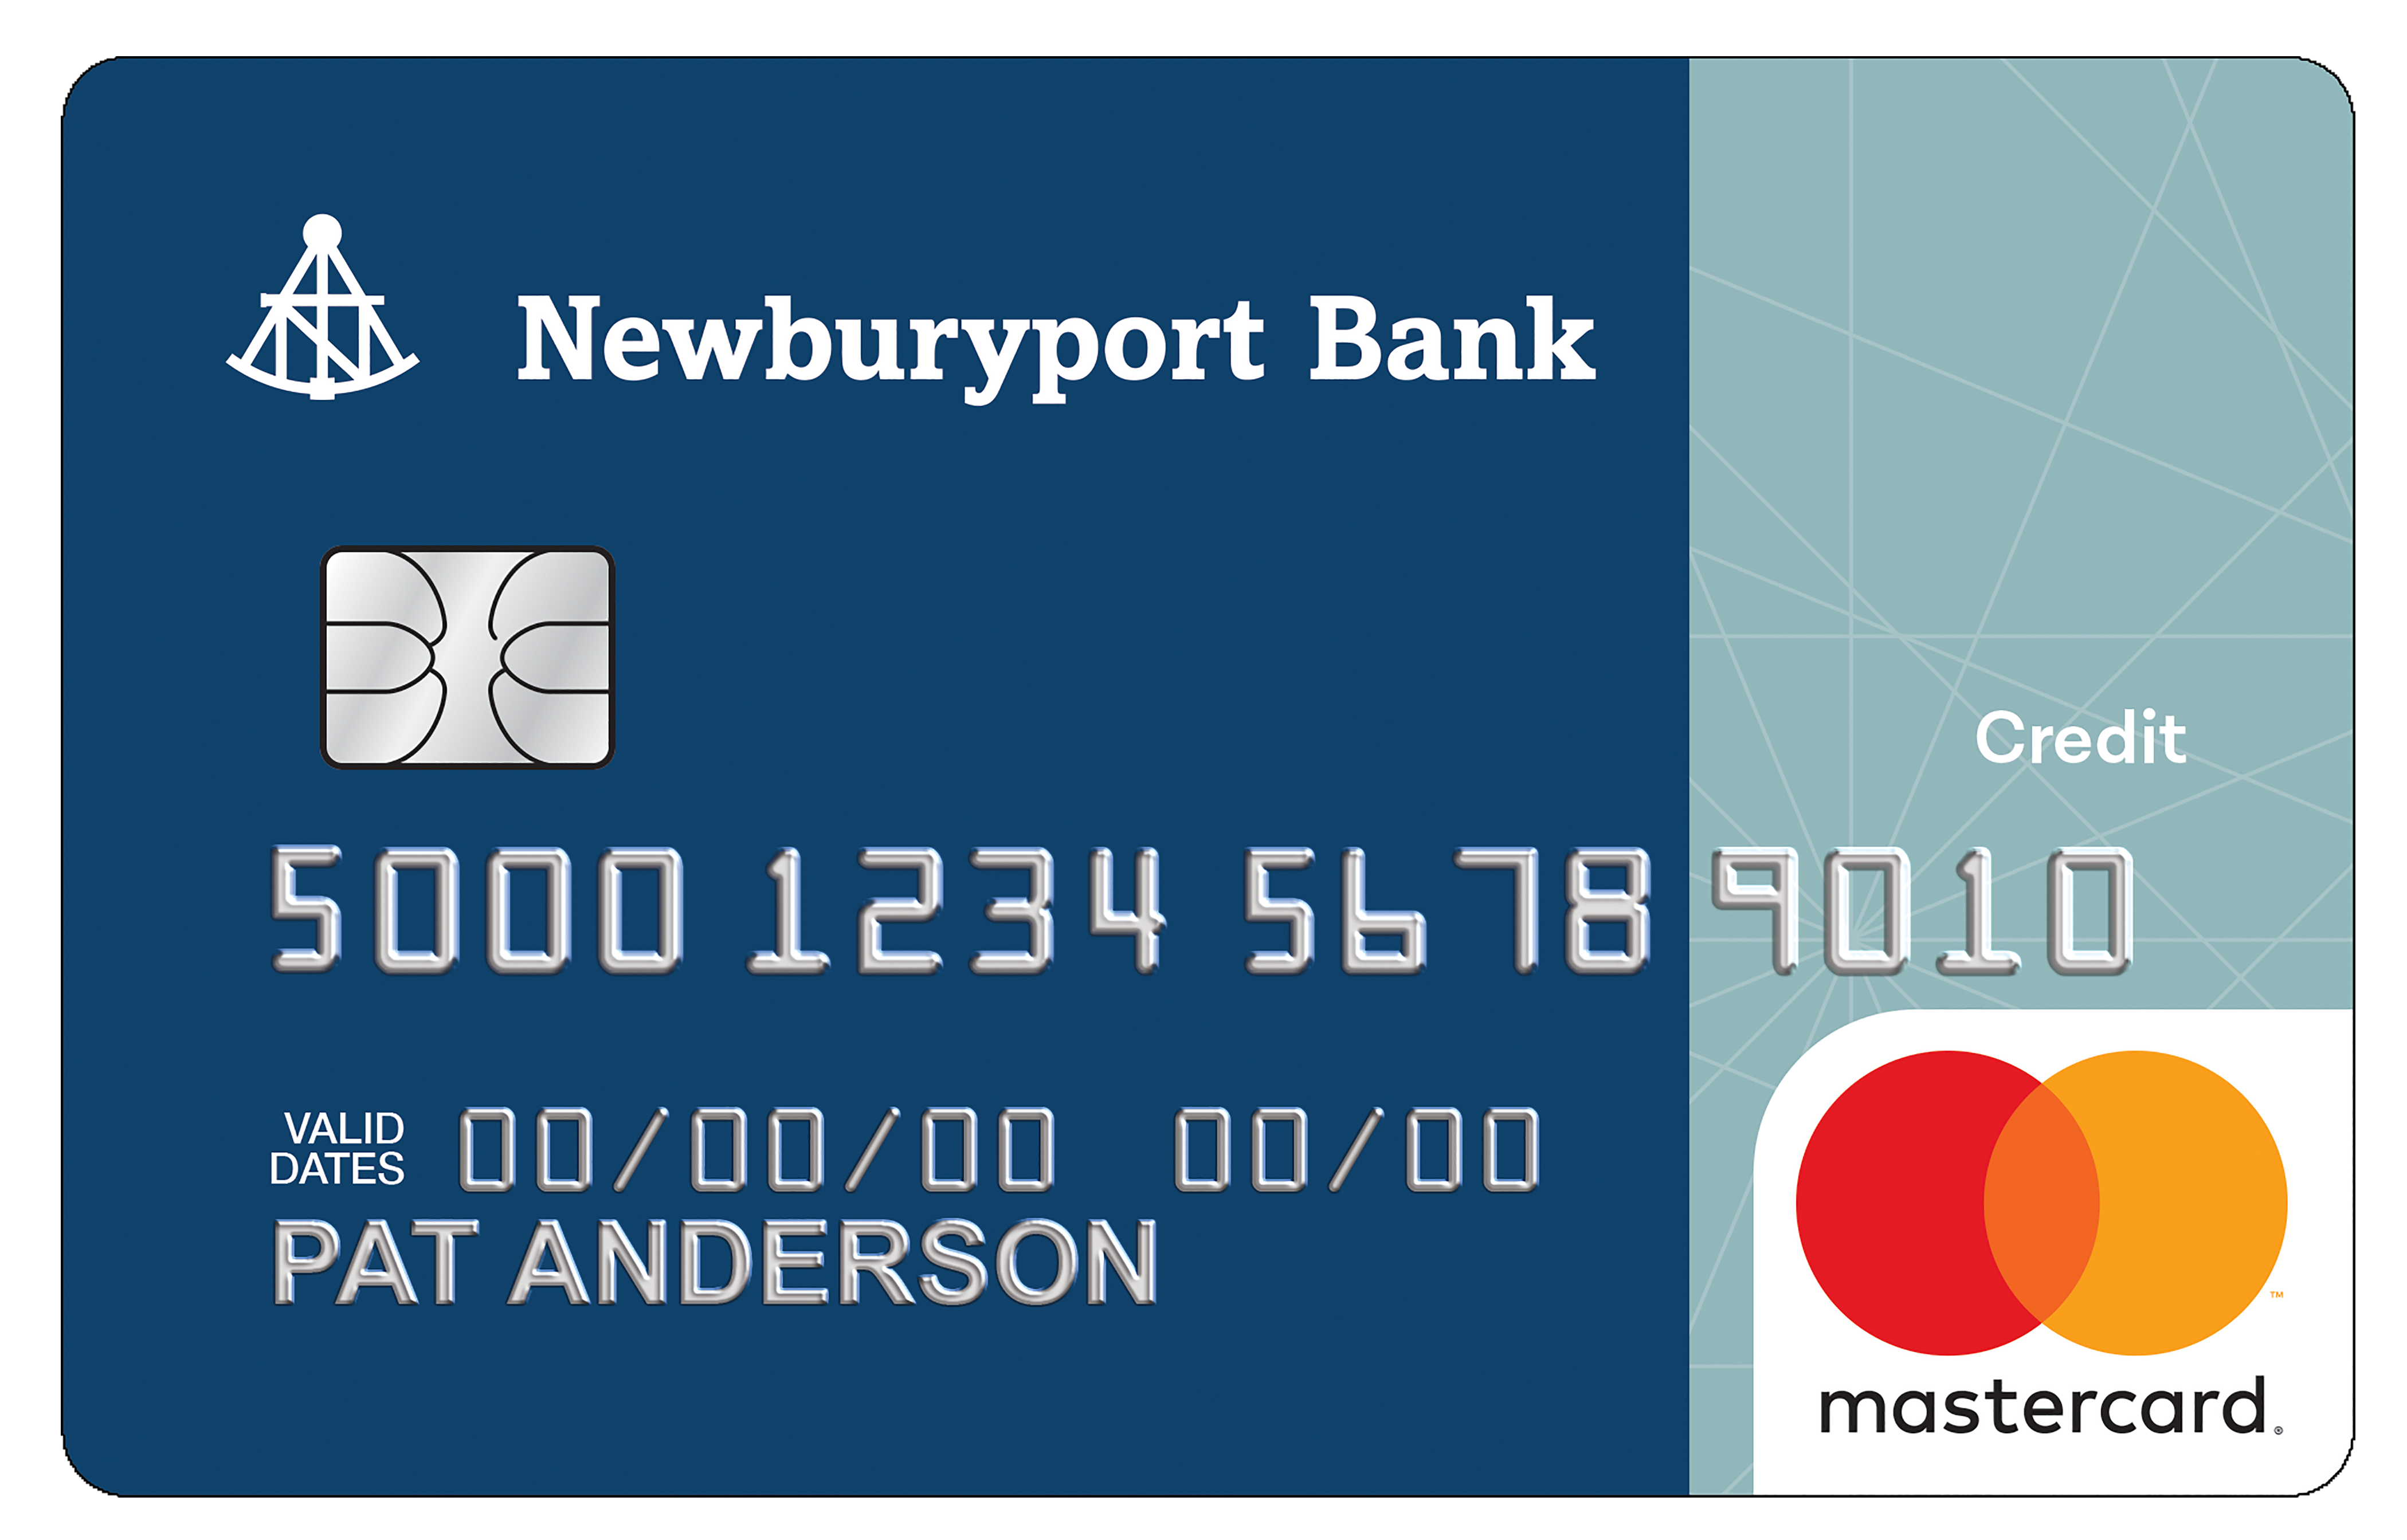 Newburyport Five Cents Savings Bank Max Cash Preferred Card